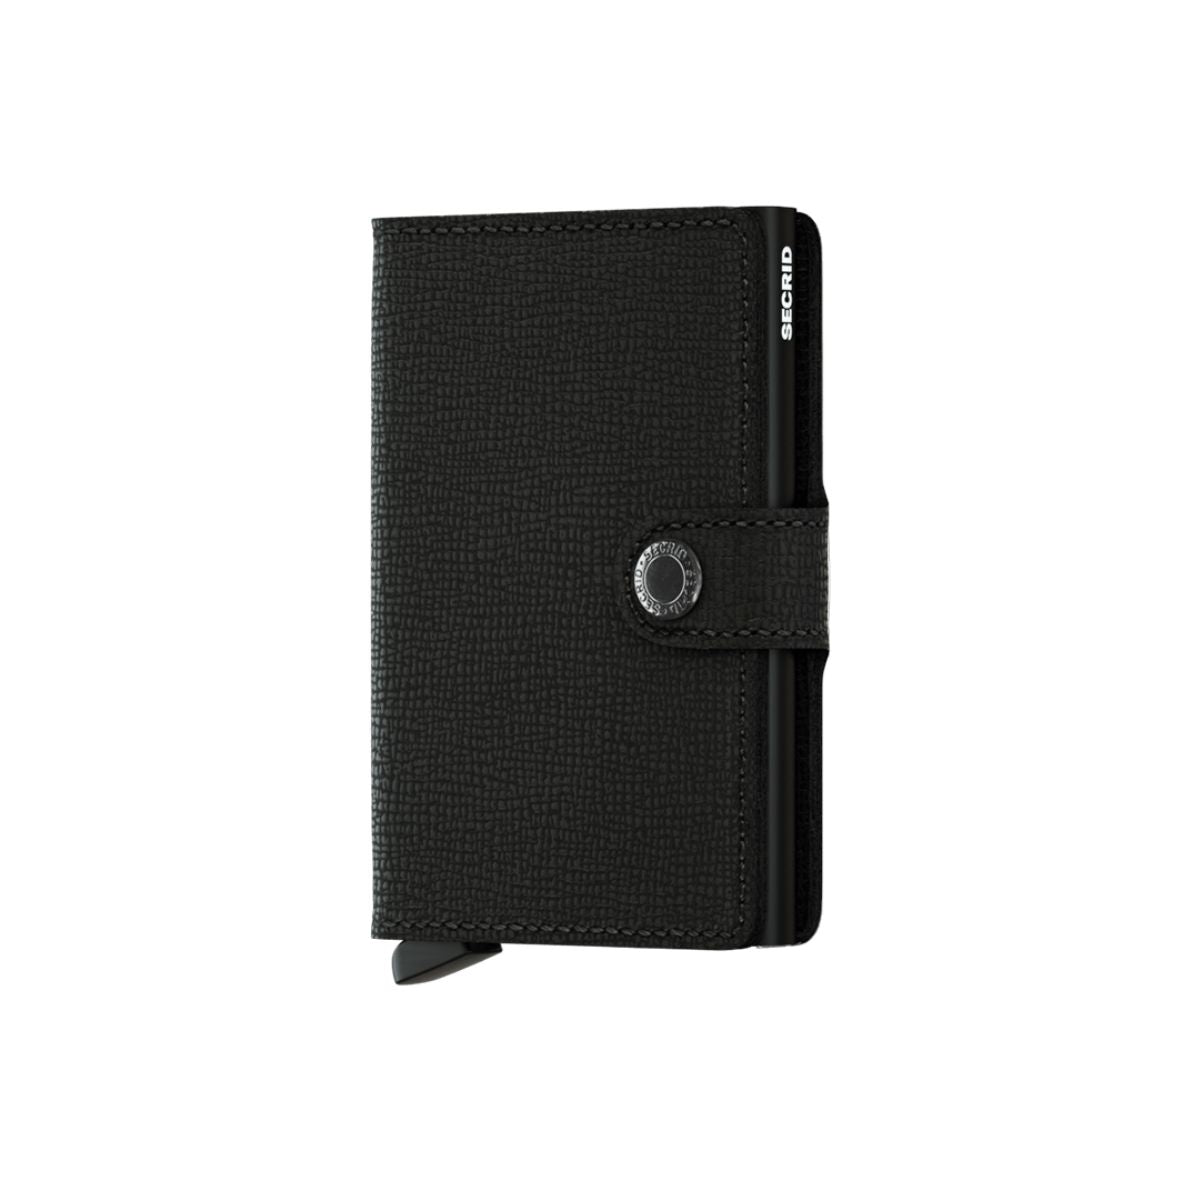 Secrid Miniwallet, Crisple Black | Secrid - Wake Concept Store  